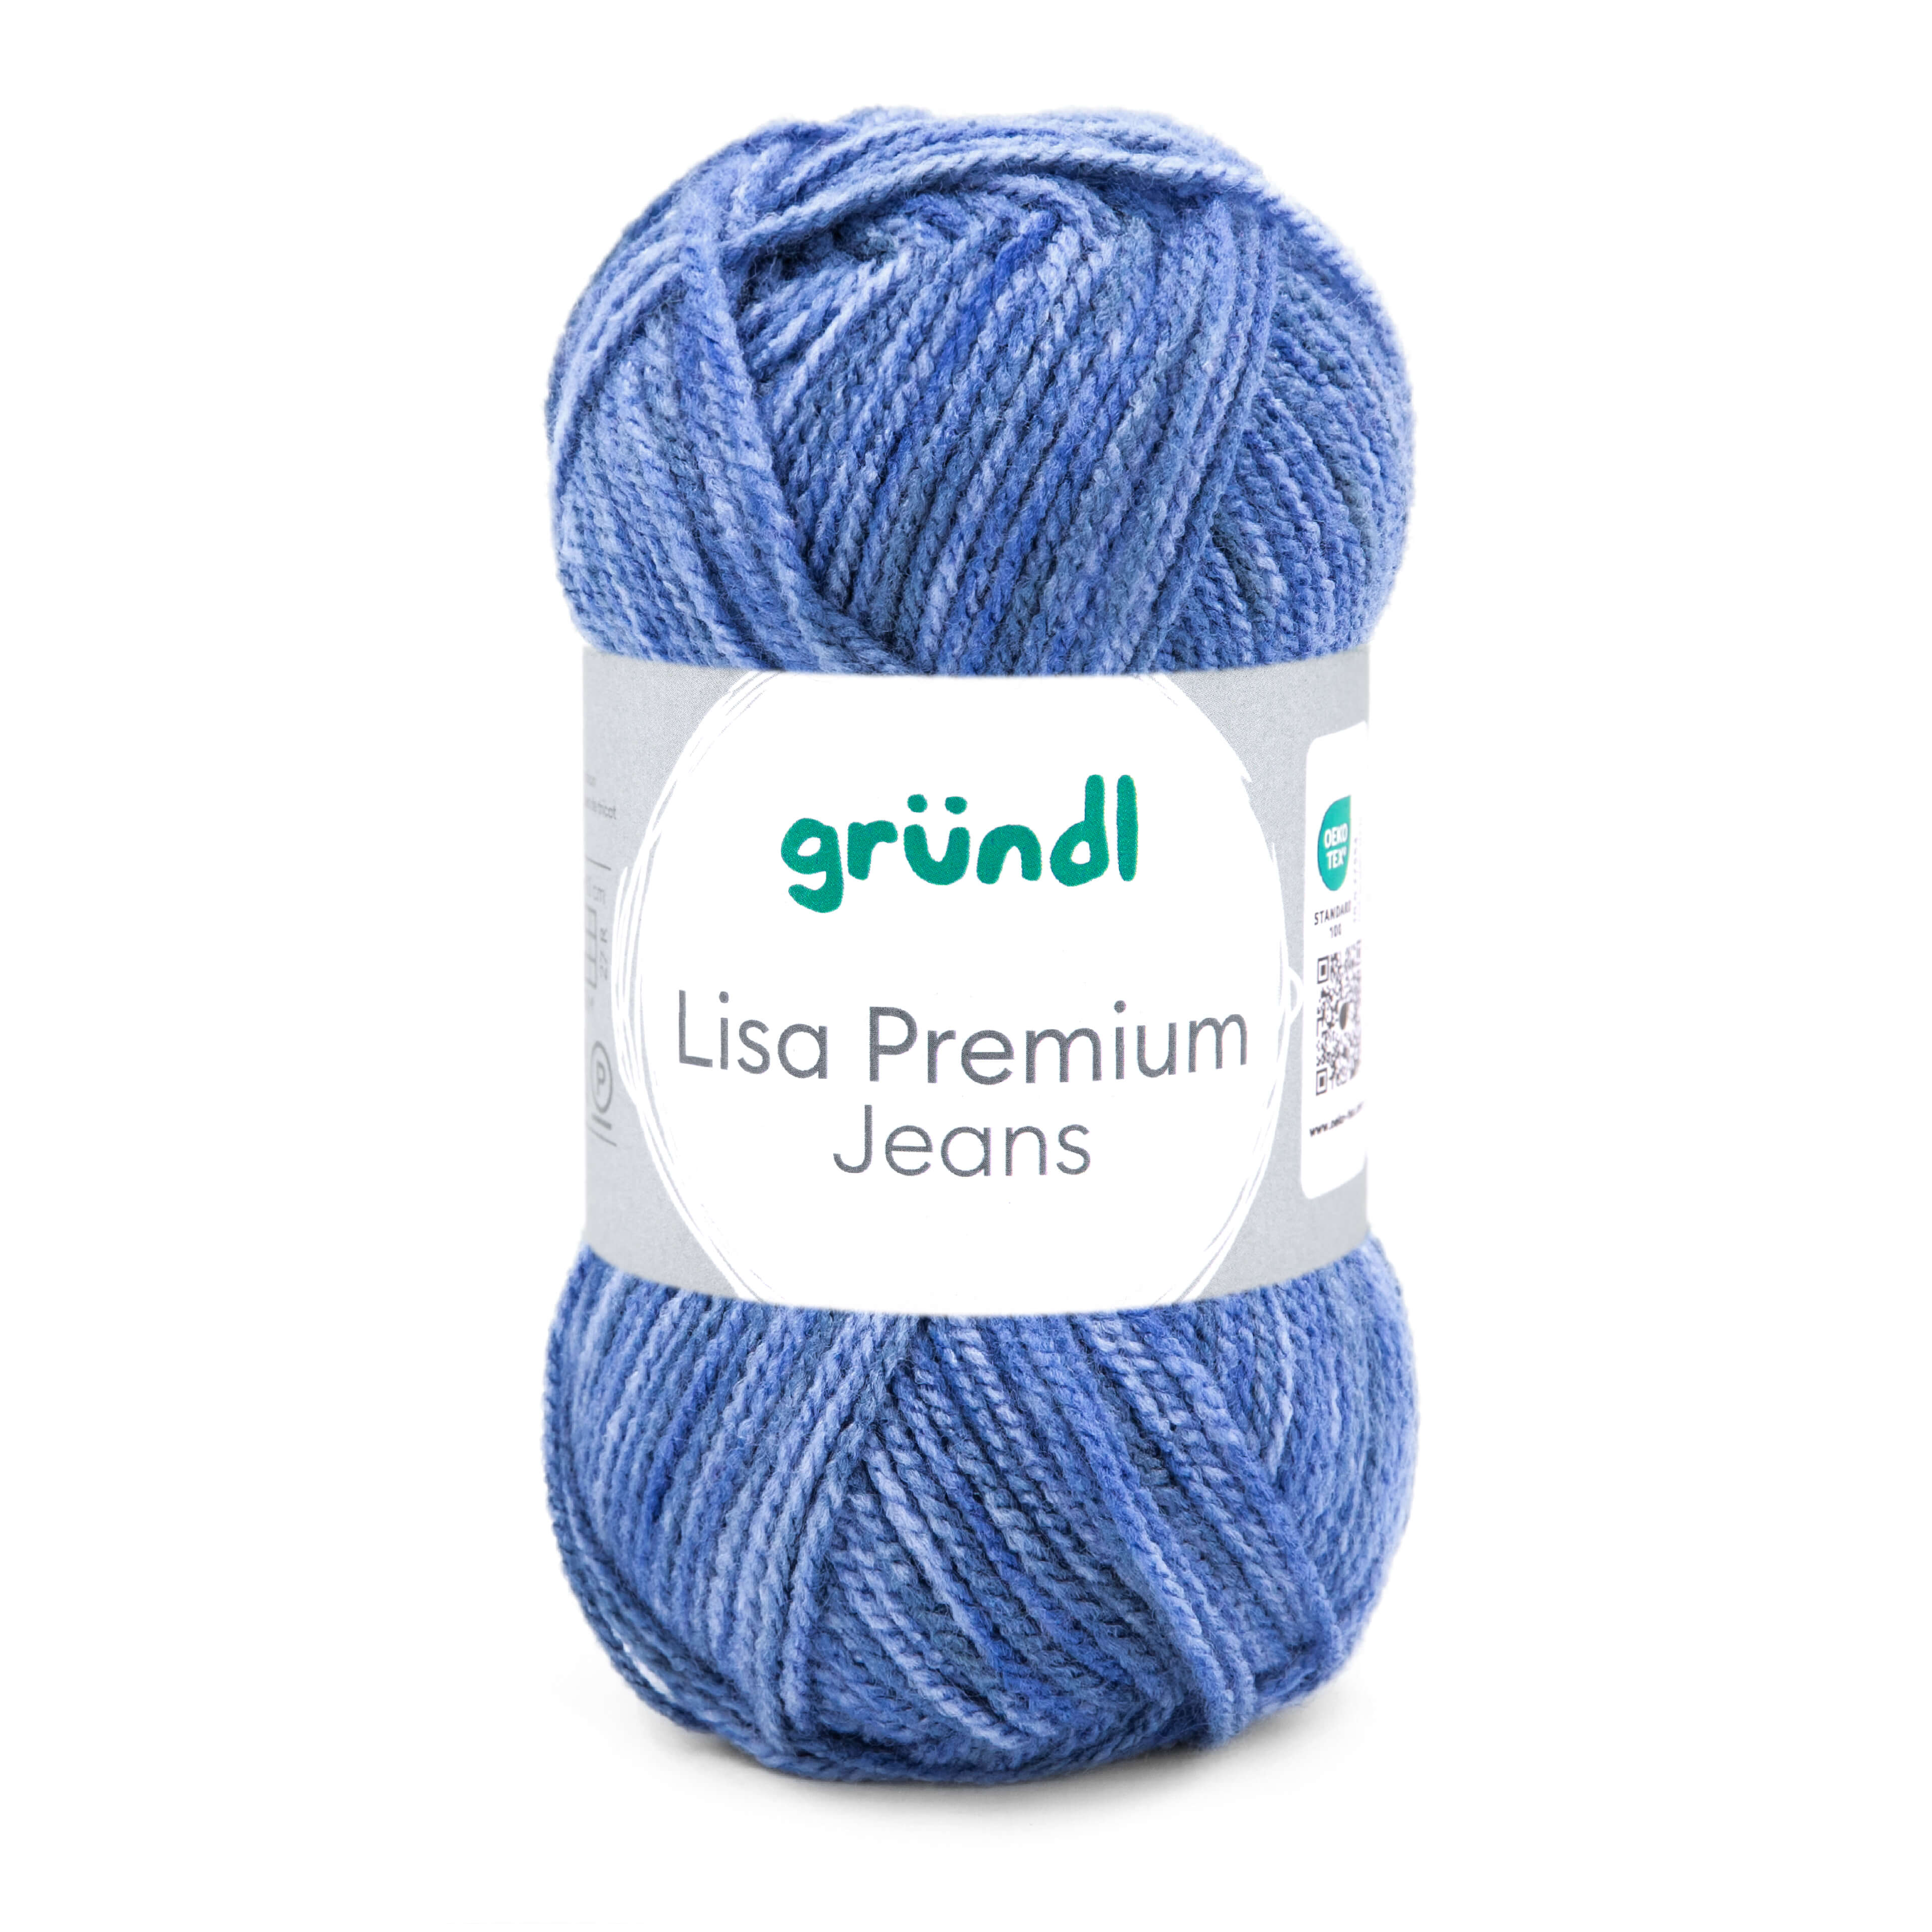 Lisa Premium Jeans